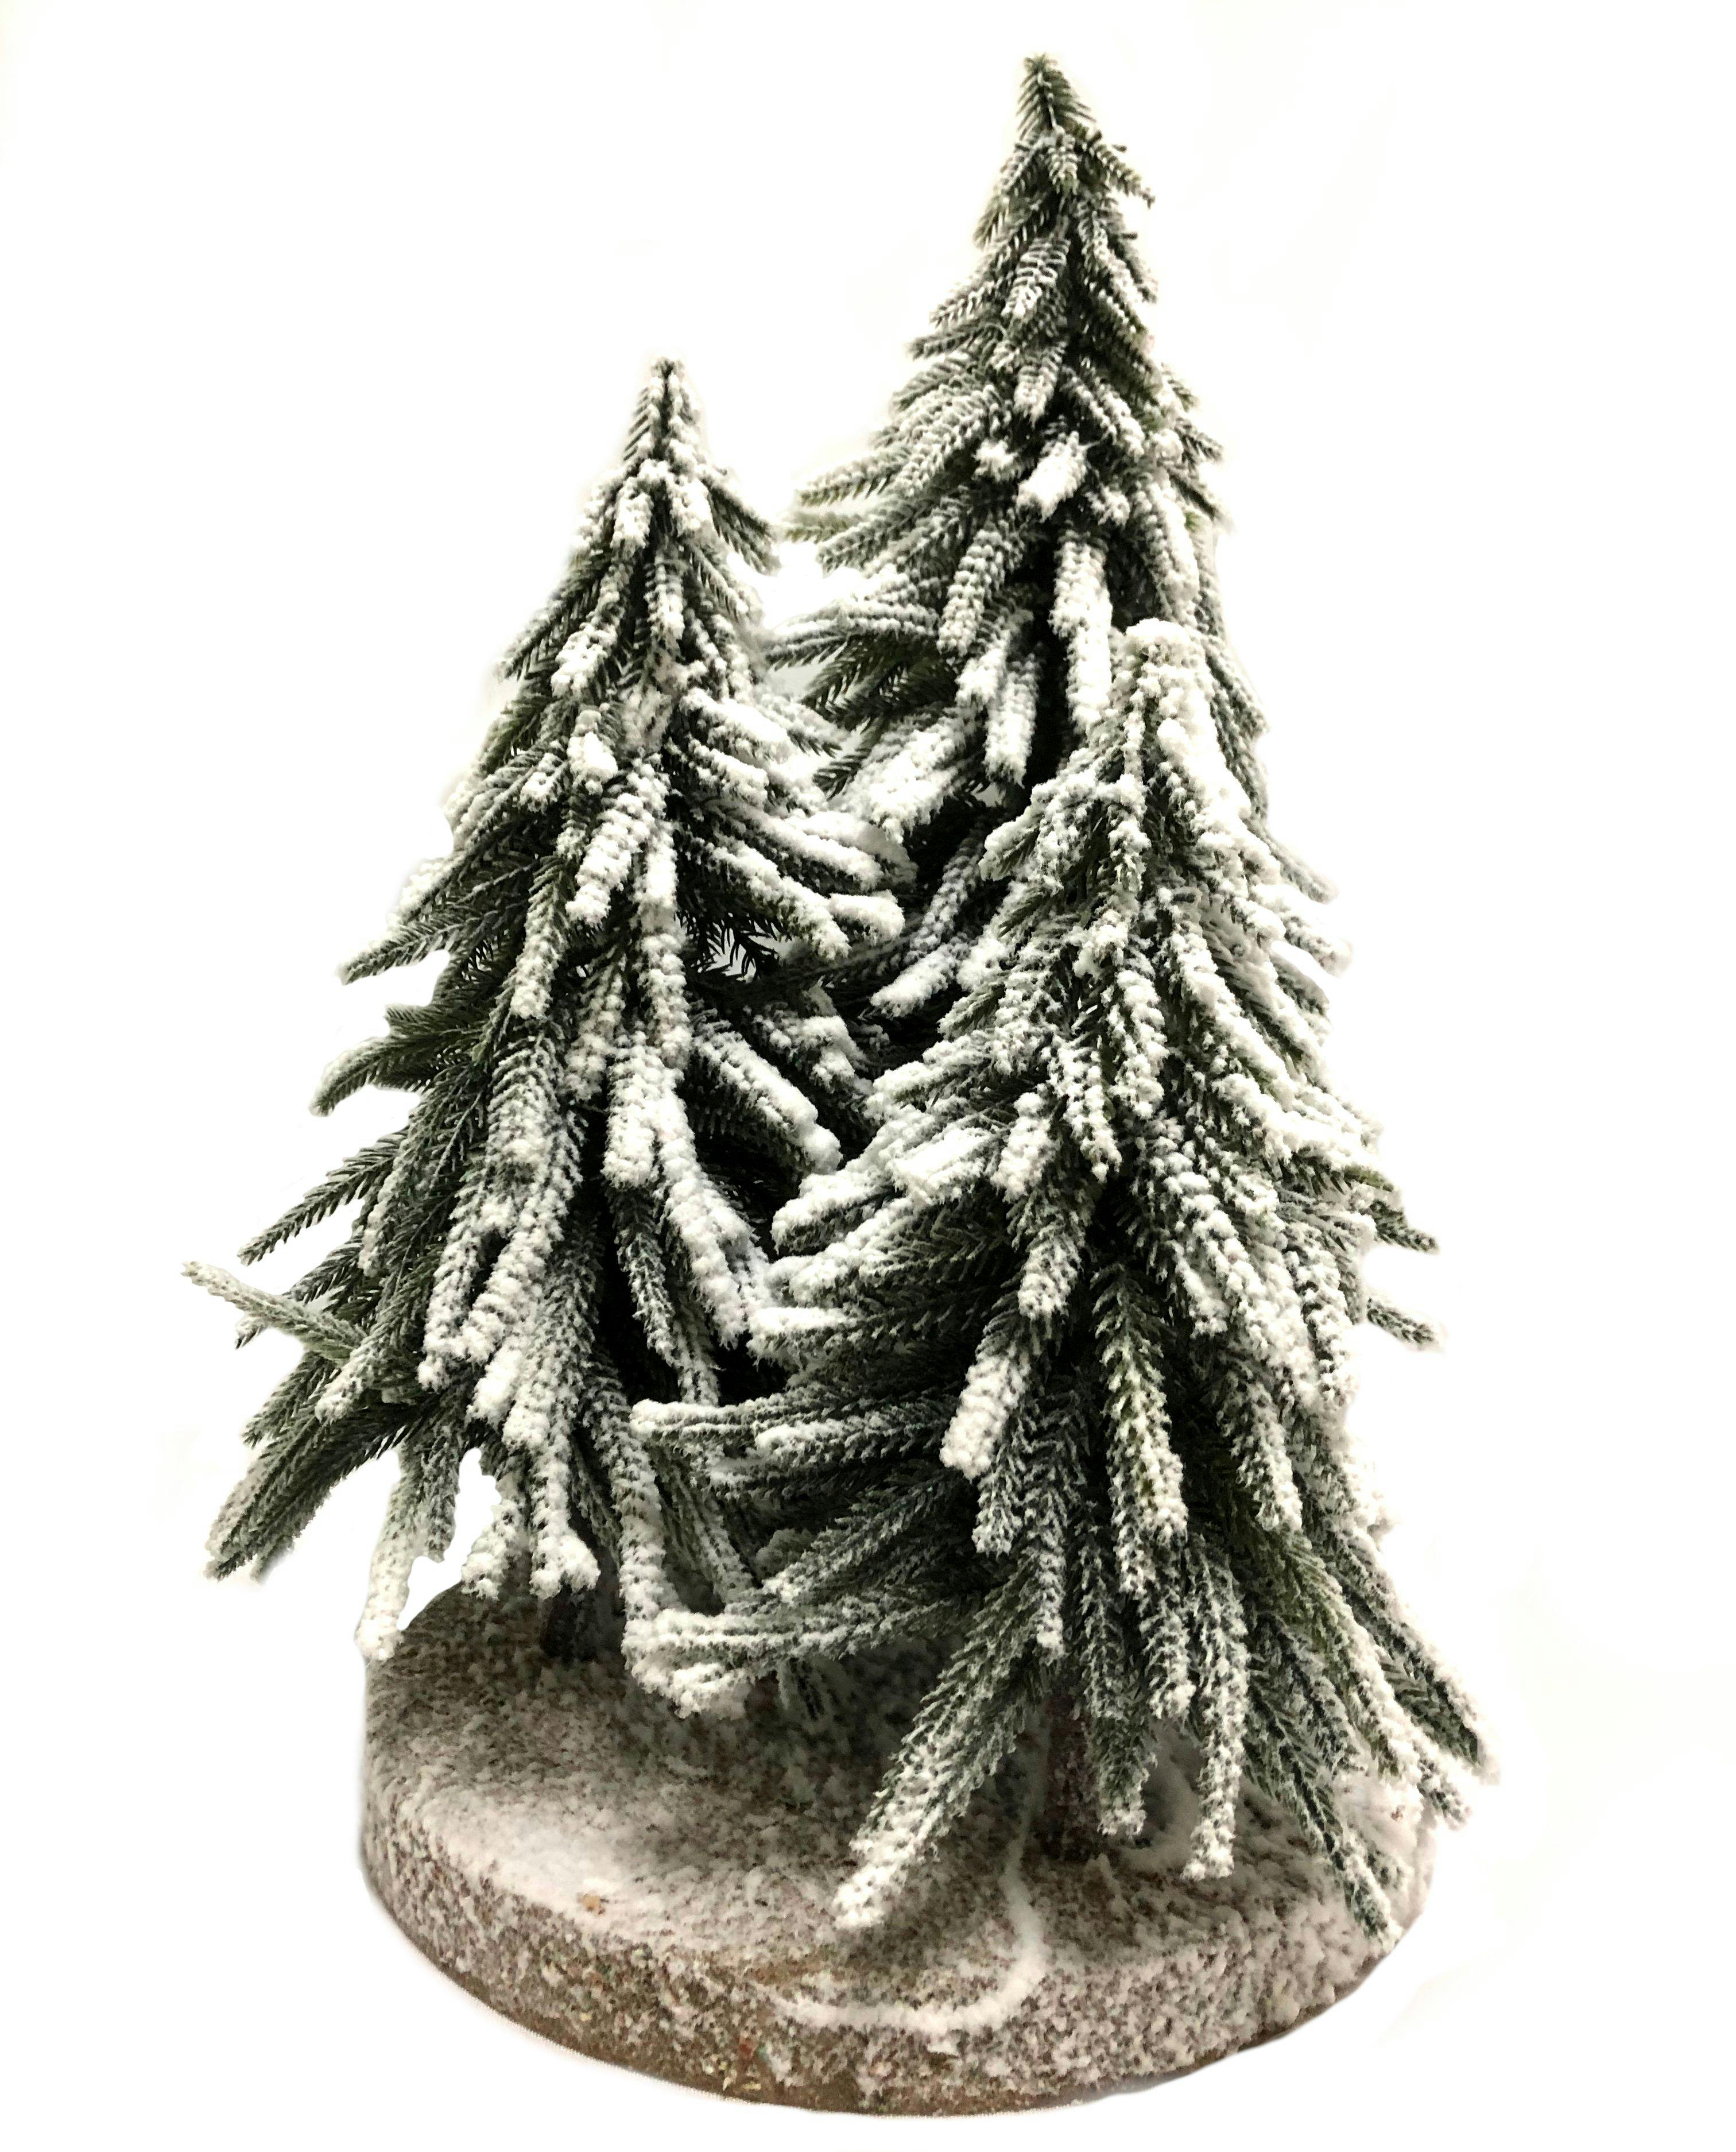 Tarrington House Árvore de Natal, plástico, 30 x 30 x 45 cm, base de  madeira, adequada para uso interior, aspeto realista, coberta de neve  artificial | METRO Marketplace